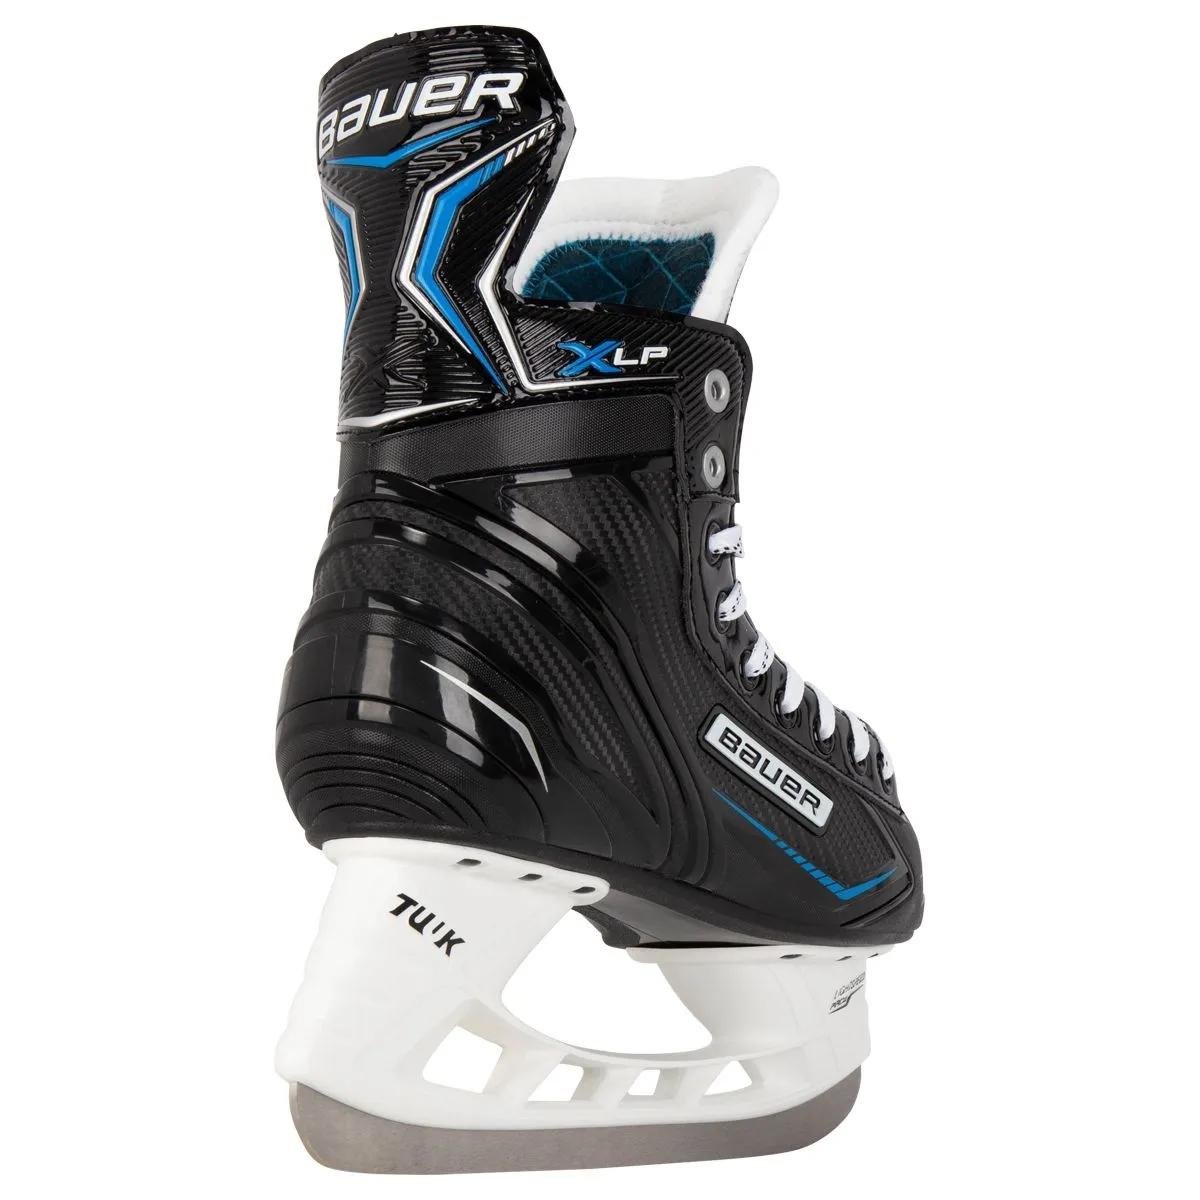 Bauer X-LP Sr. Hockey Skatesproduct zoom image #4